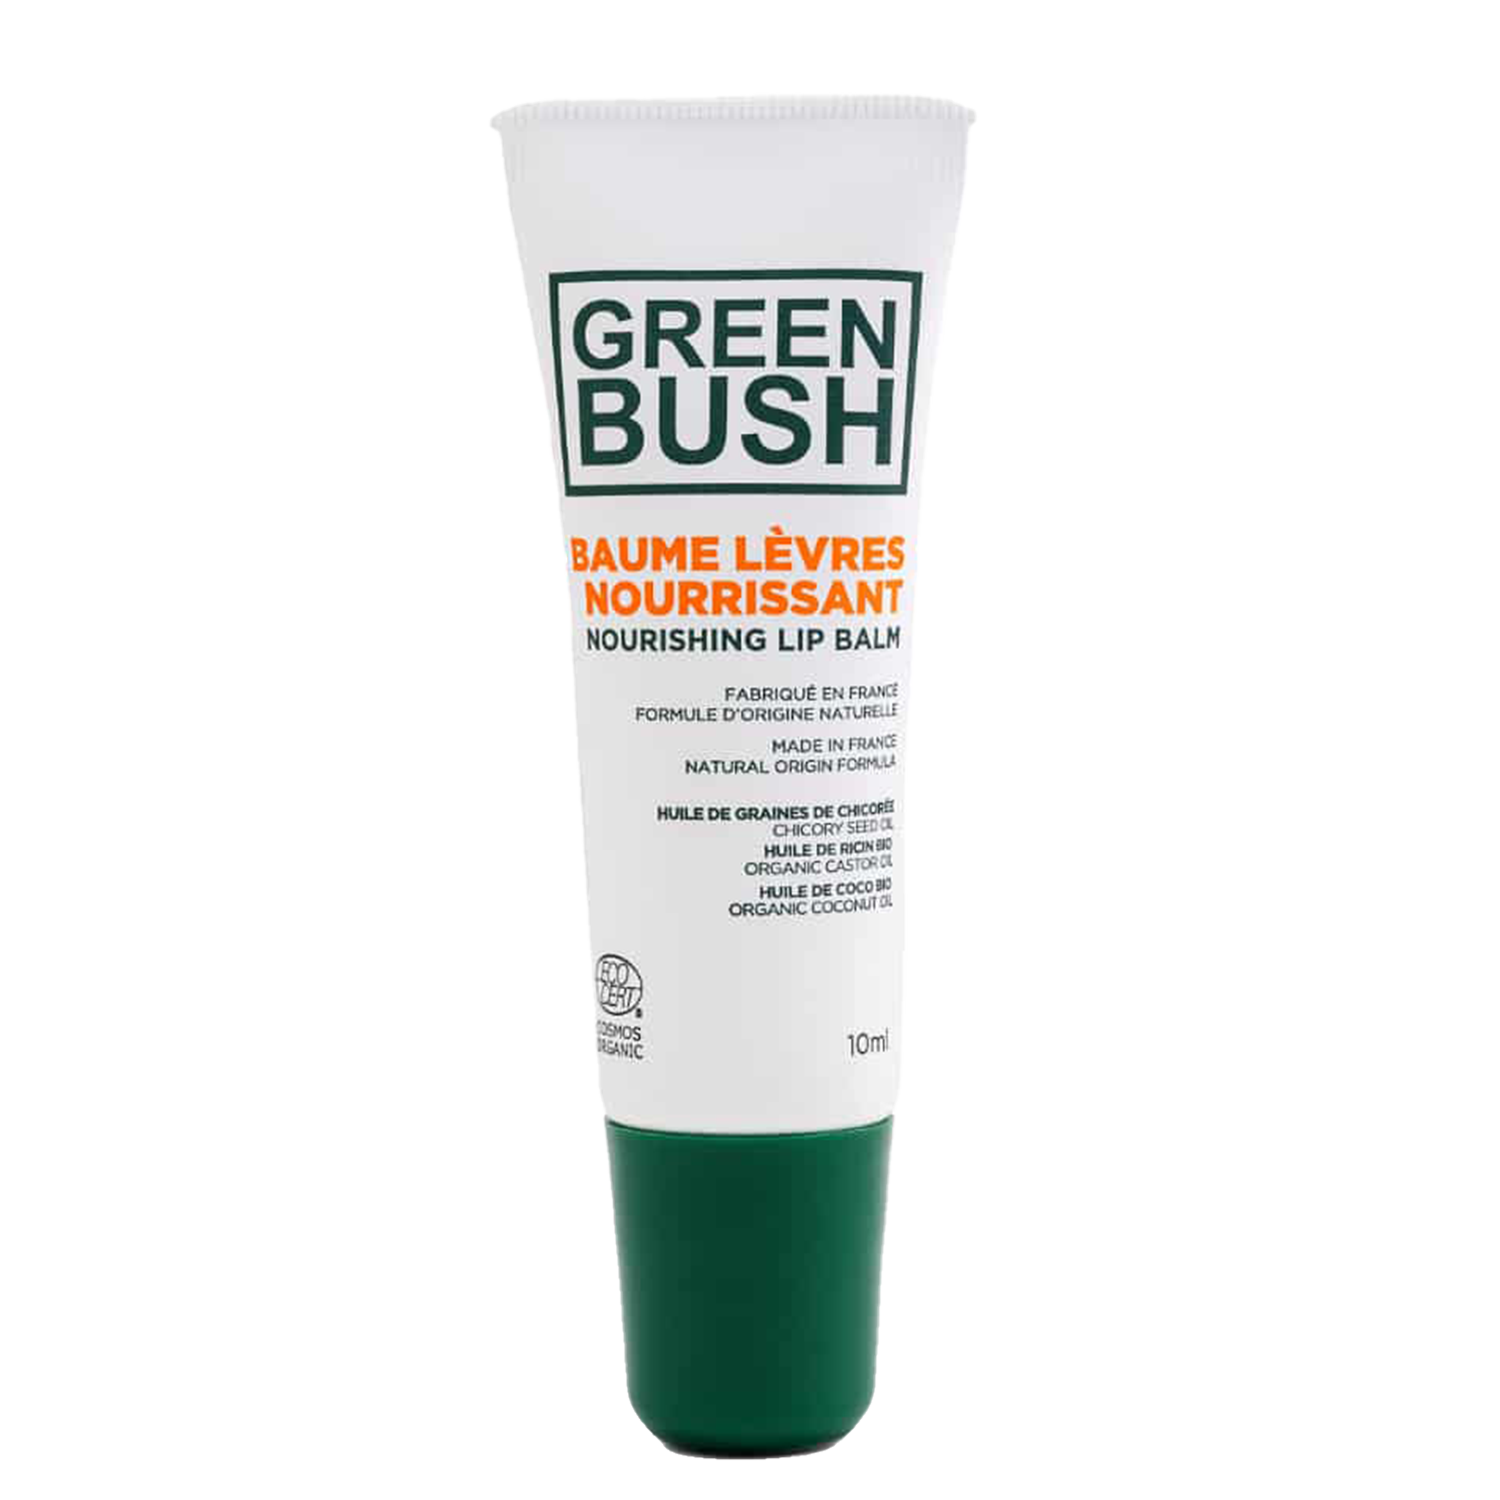 Greenbush Nourishing Lip Balm